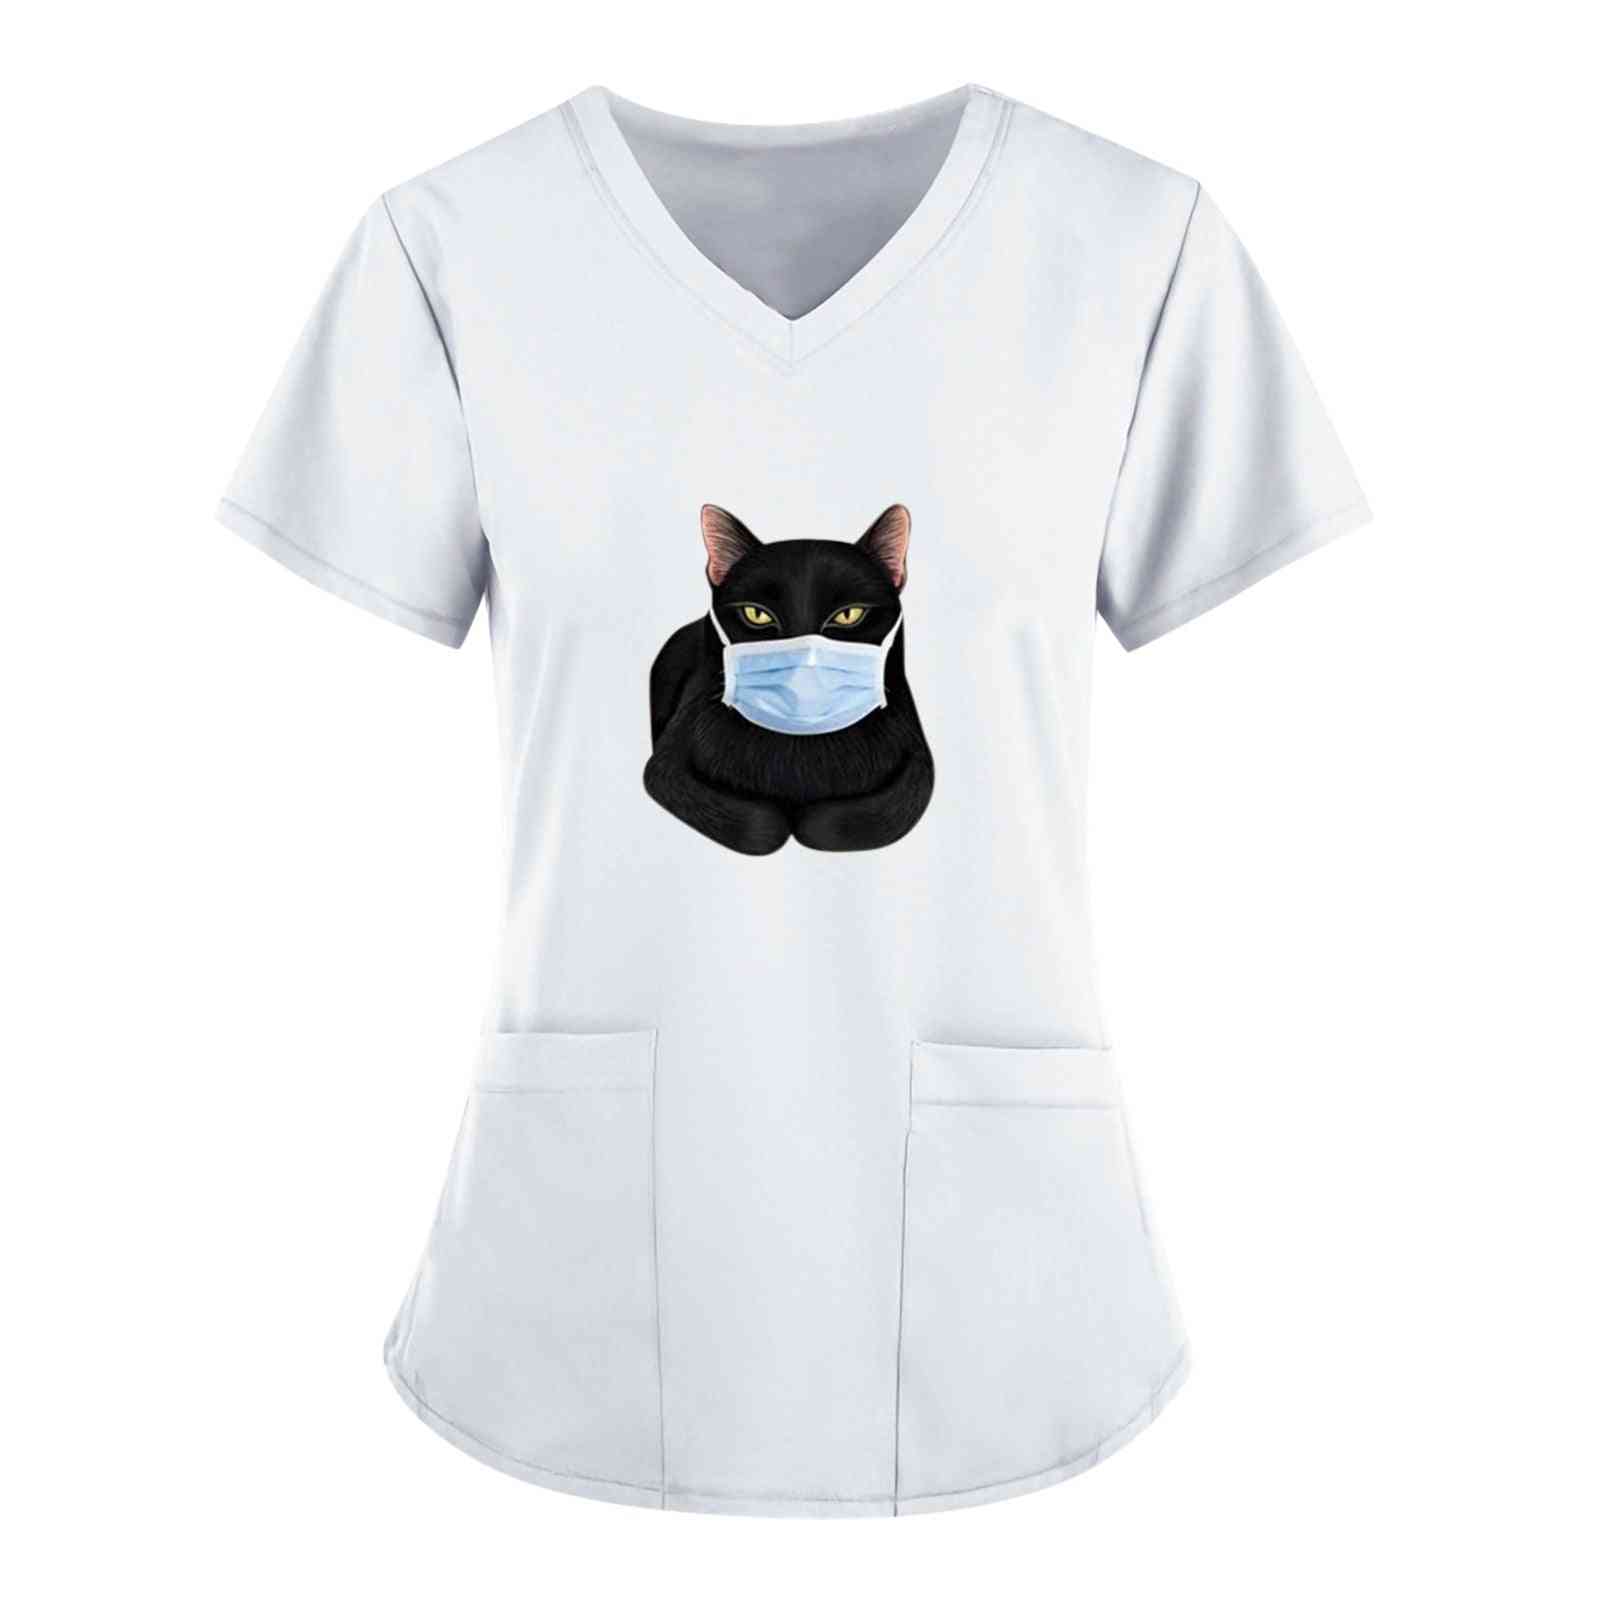 Black Cat Print Nursing Scrubs Tops